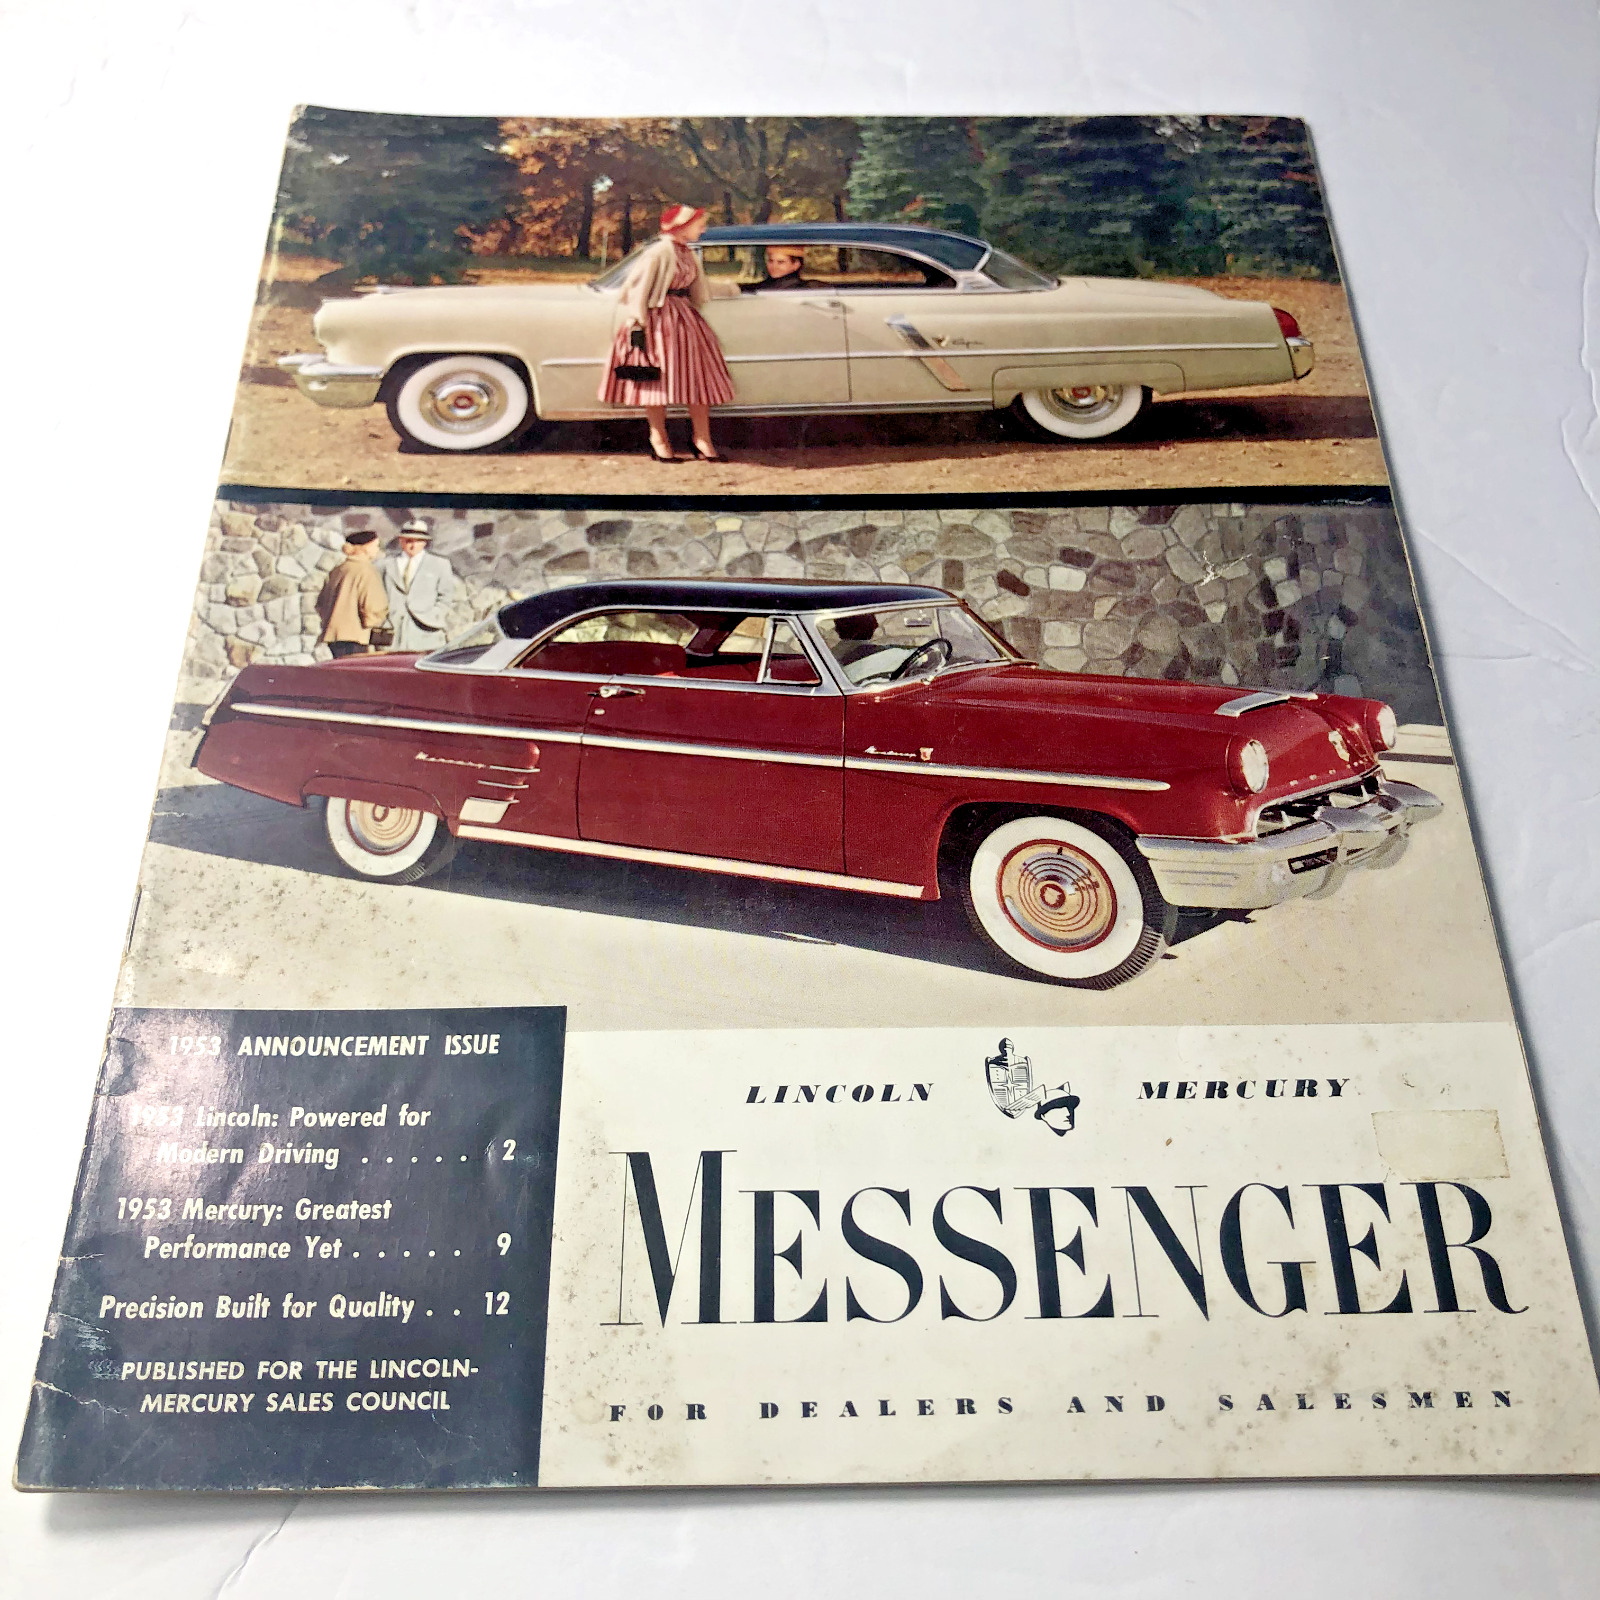 1953 Lincoln-Mercury Messenger magazine, Announcement Issue